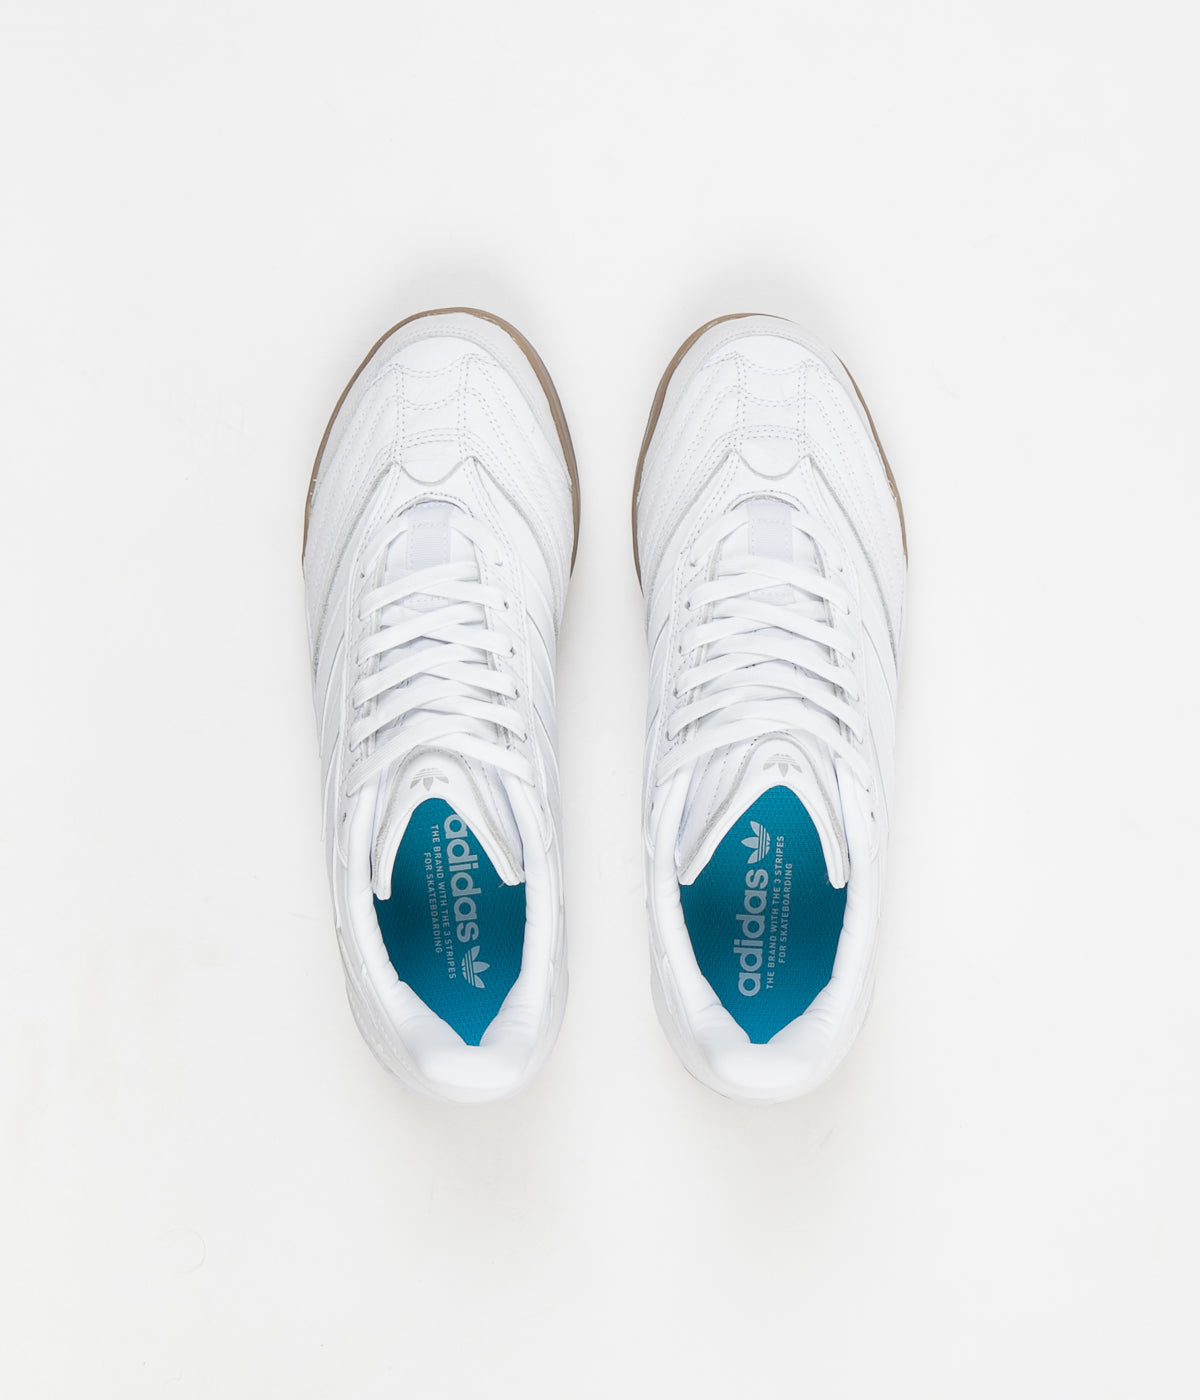 Nationale Shoes - White / Silver Metallic / M2 | Flatspot